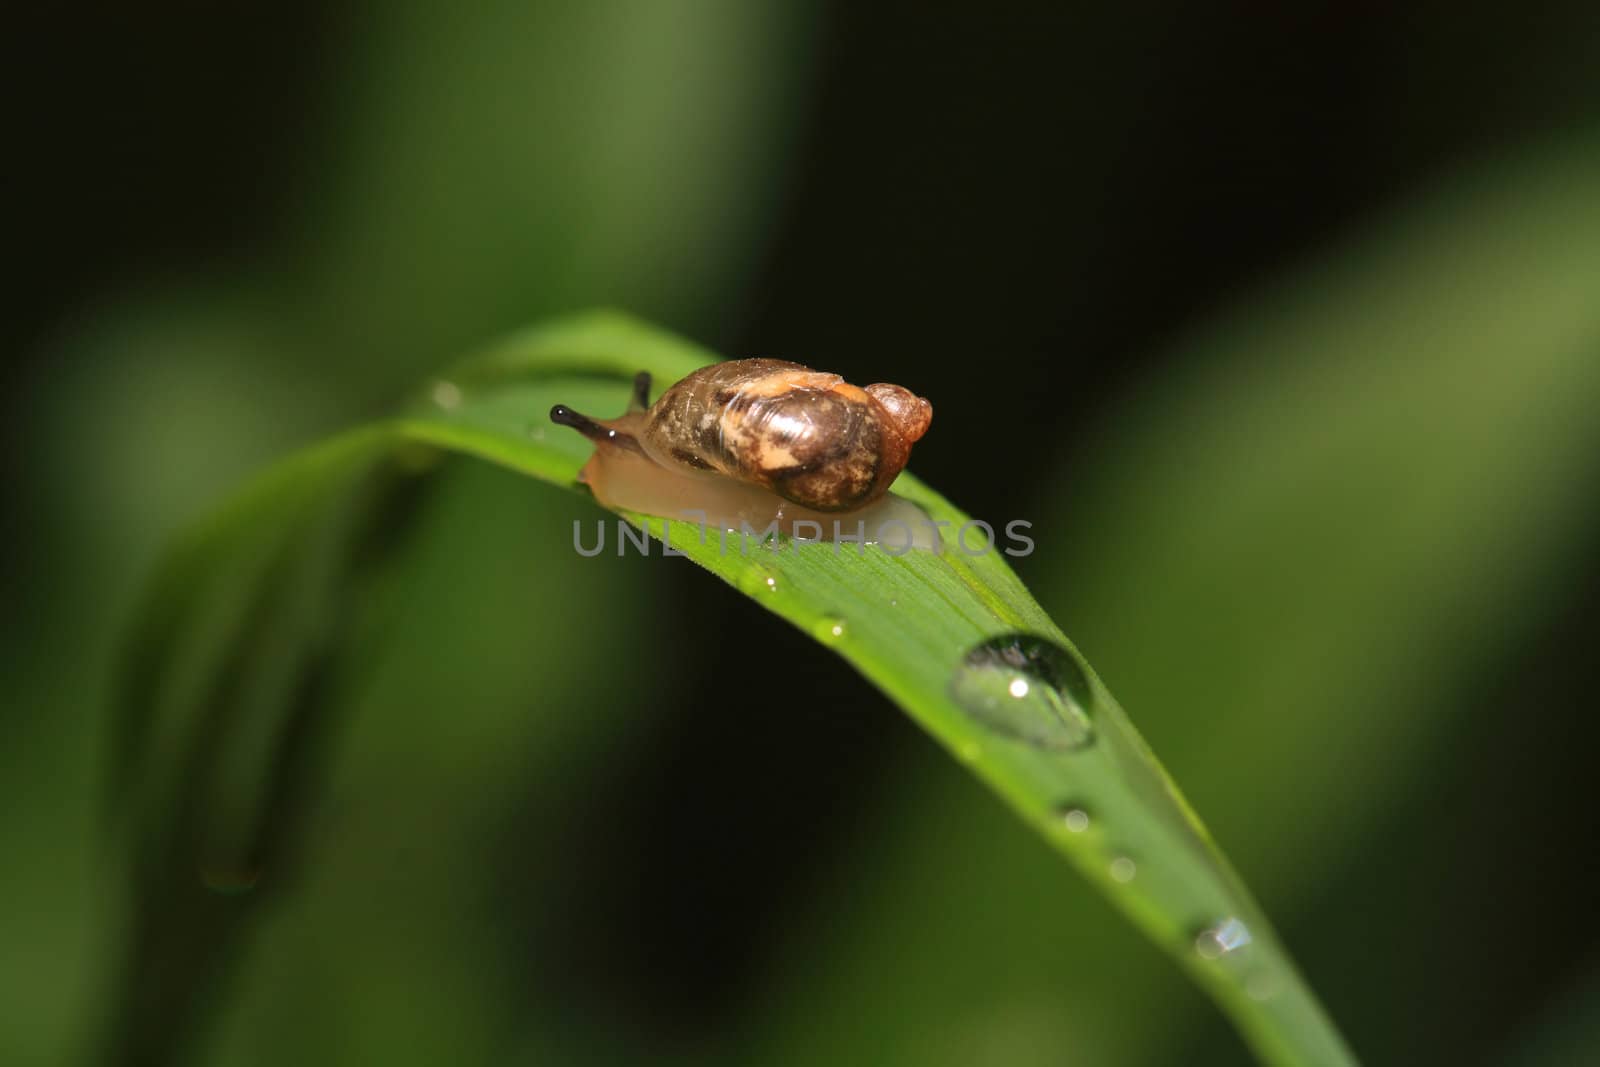 snail on herb amongst rain dripped by basel101658